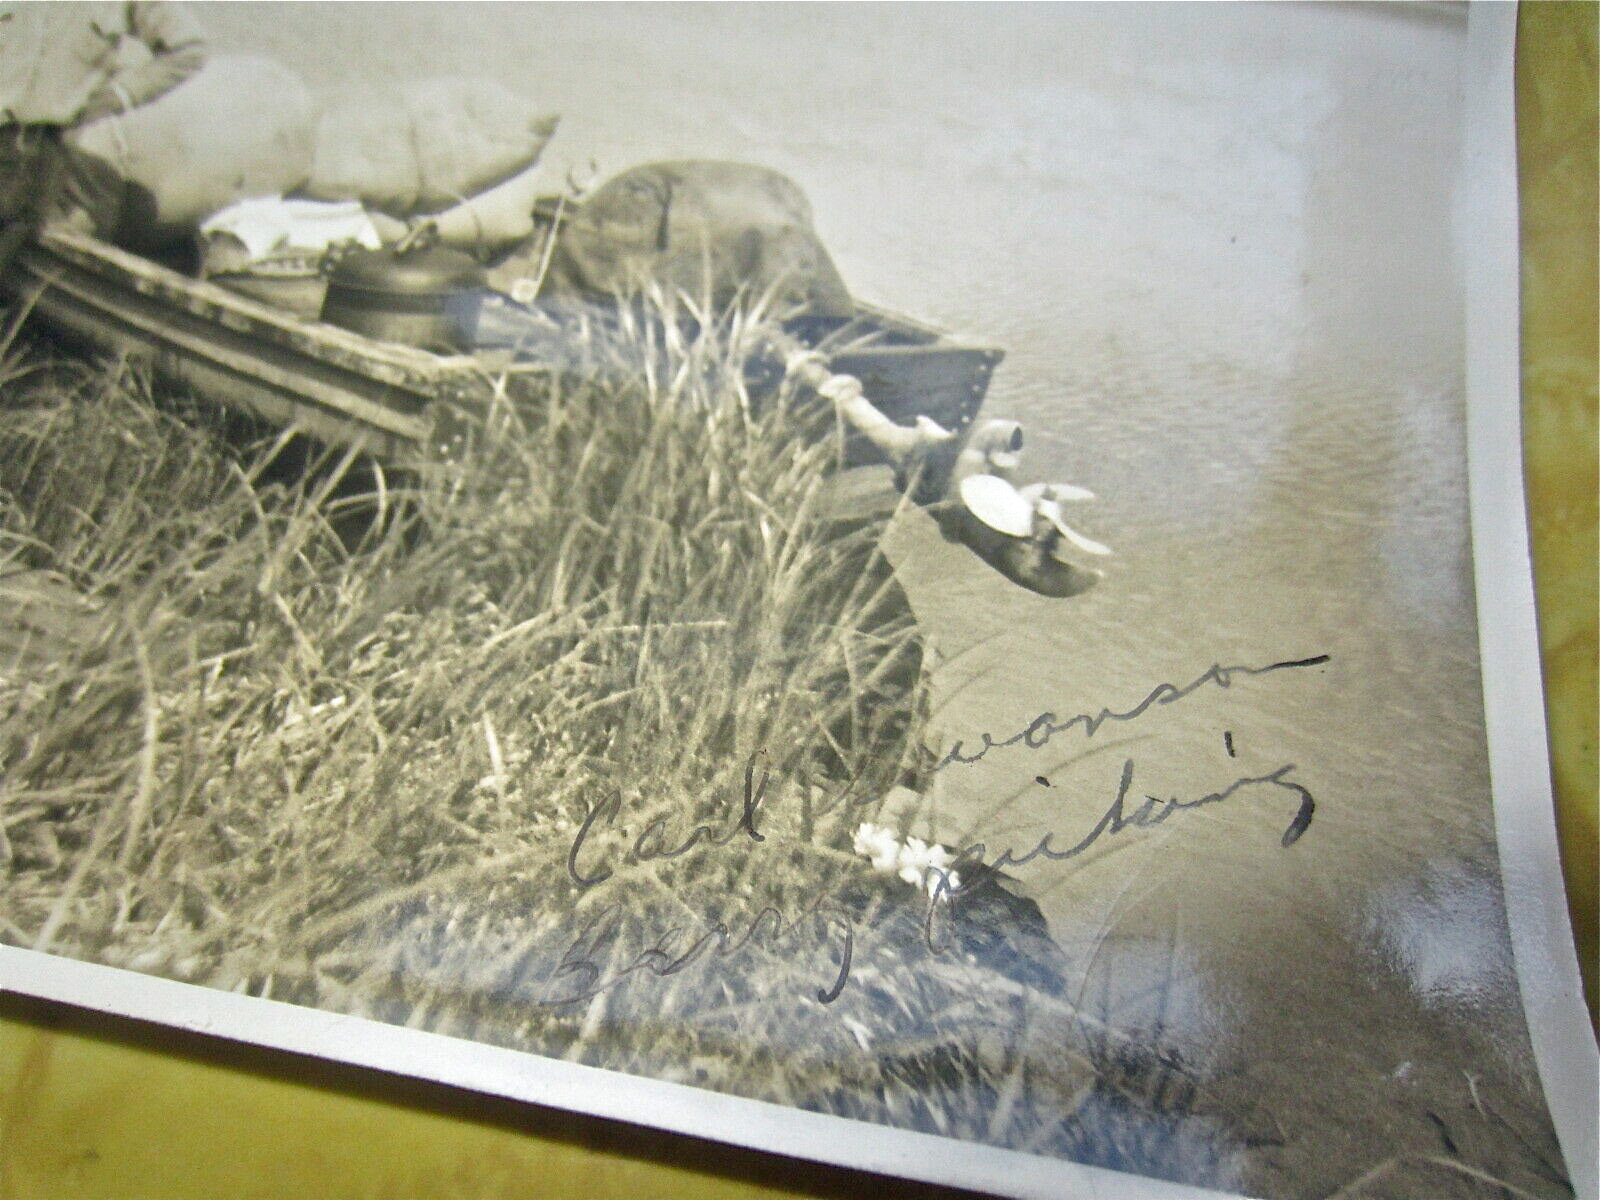 For sale: original photograph of Carl Swanson berry
              picking on the Koyuk River, Alaska.